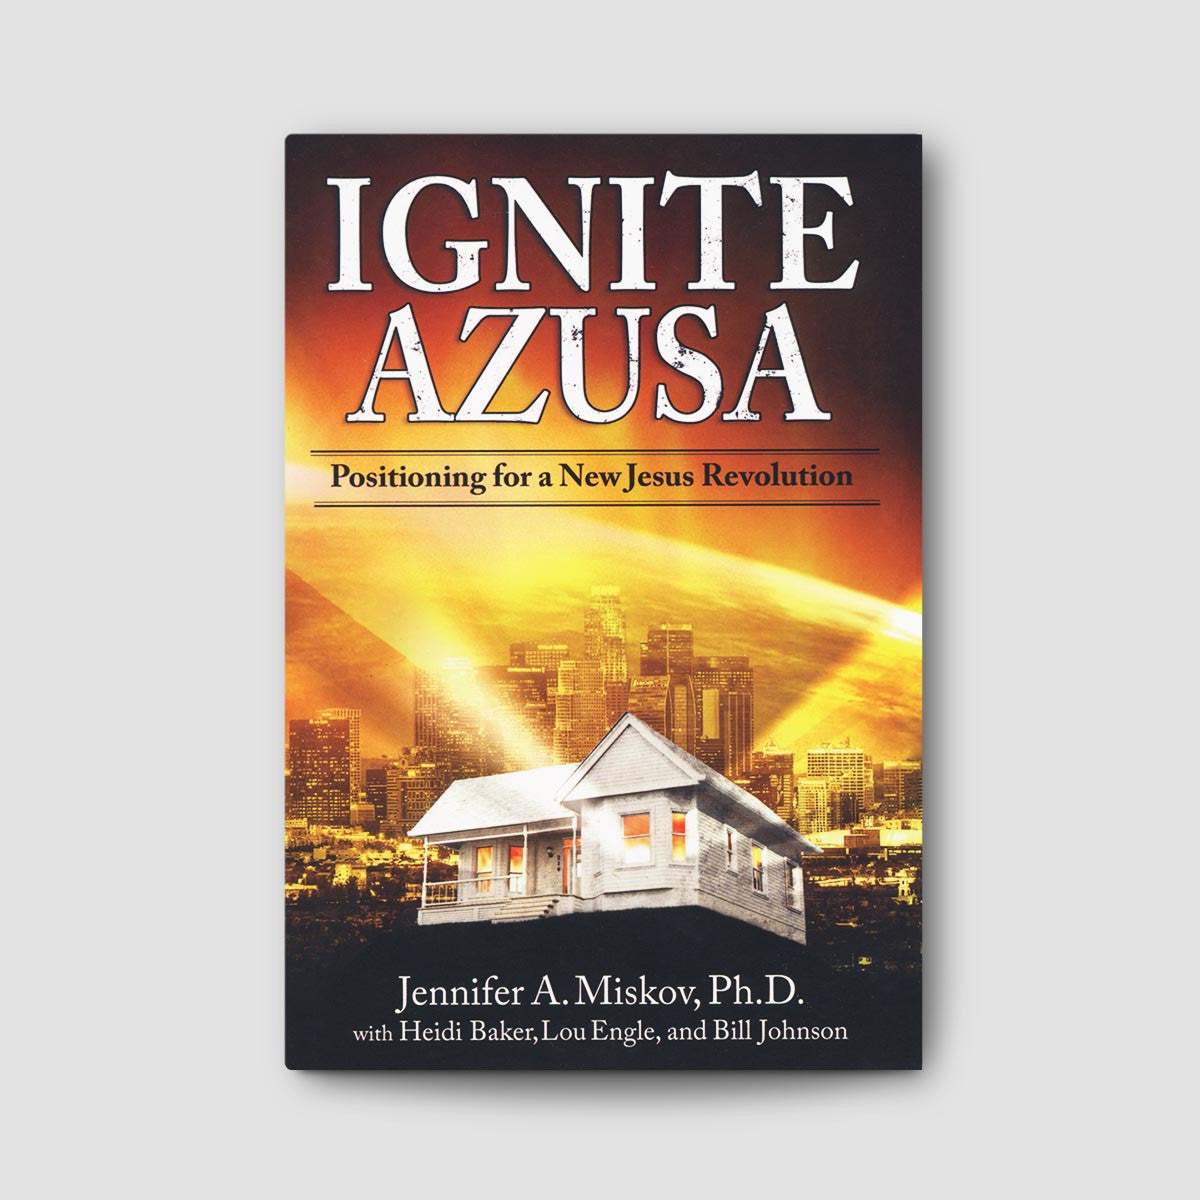 Ignite Azusa: Positioning for a New Jesus Revolution